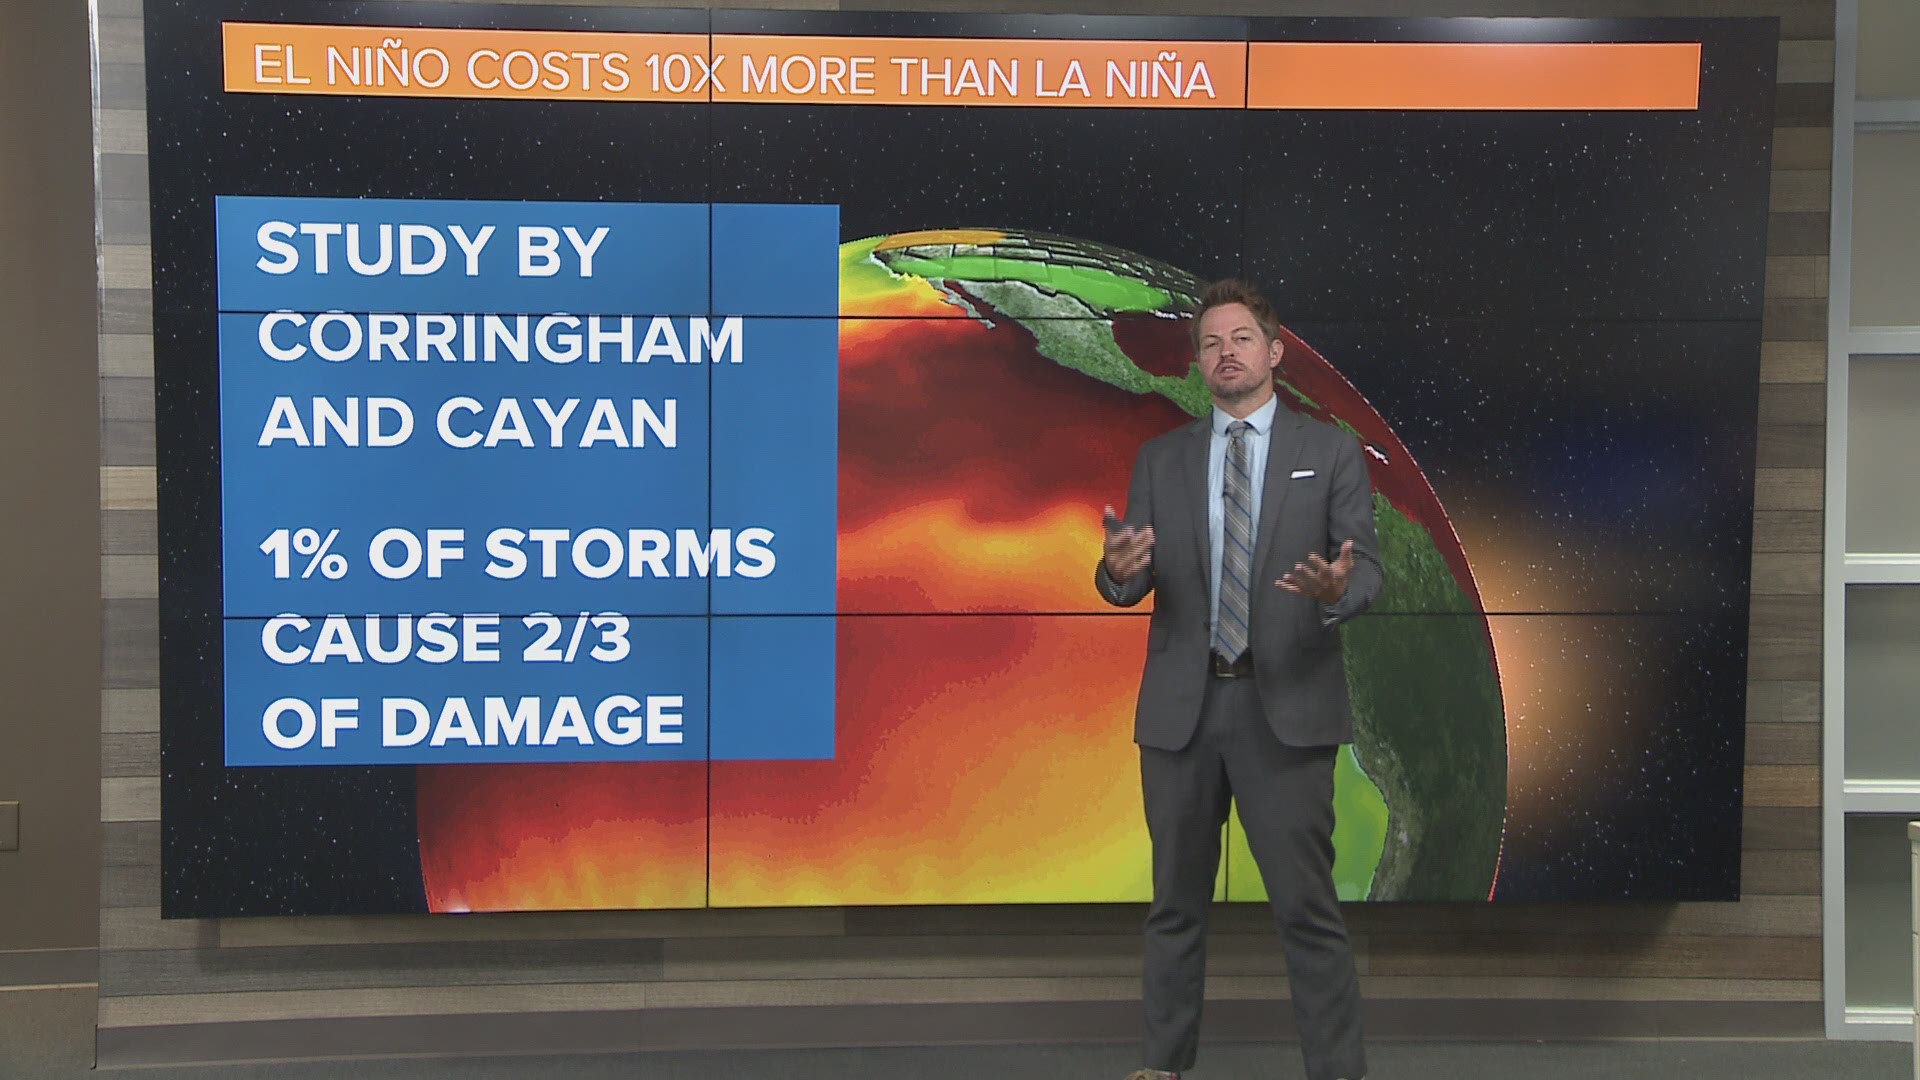 Rob explains how an El Nino can cost up to 10 times more than a La Nina.